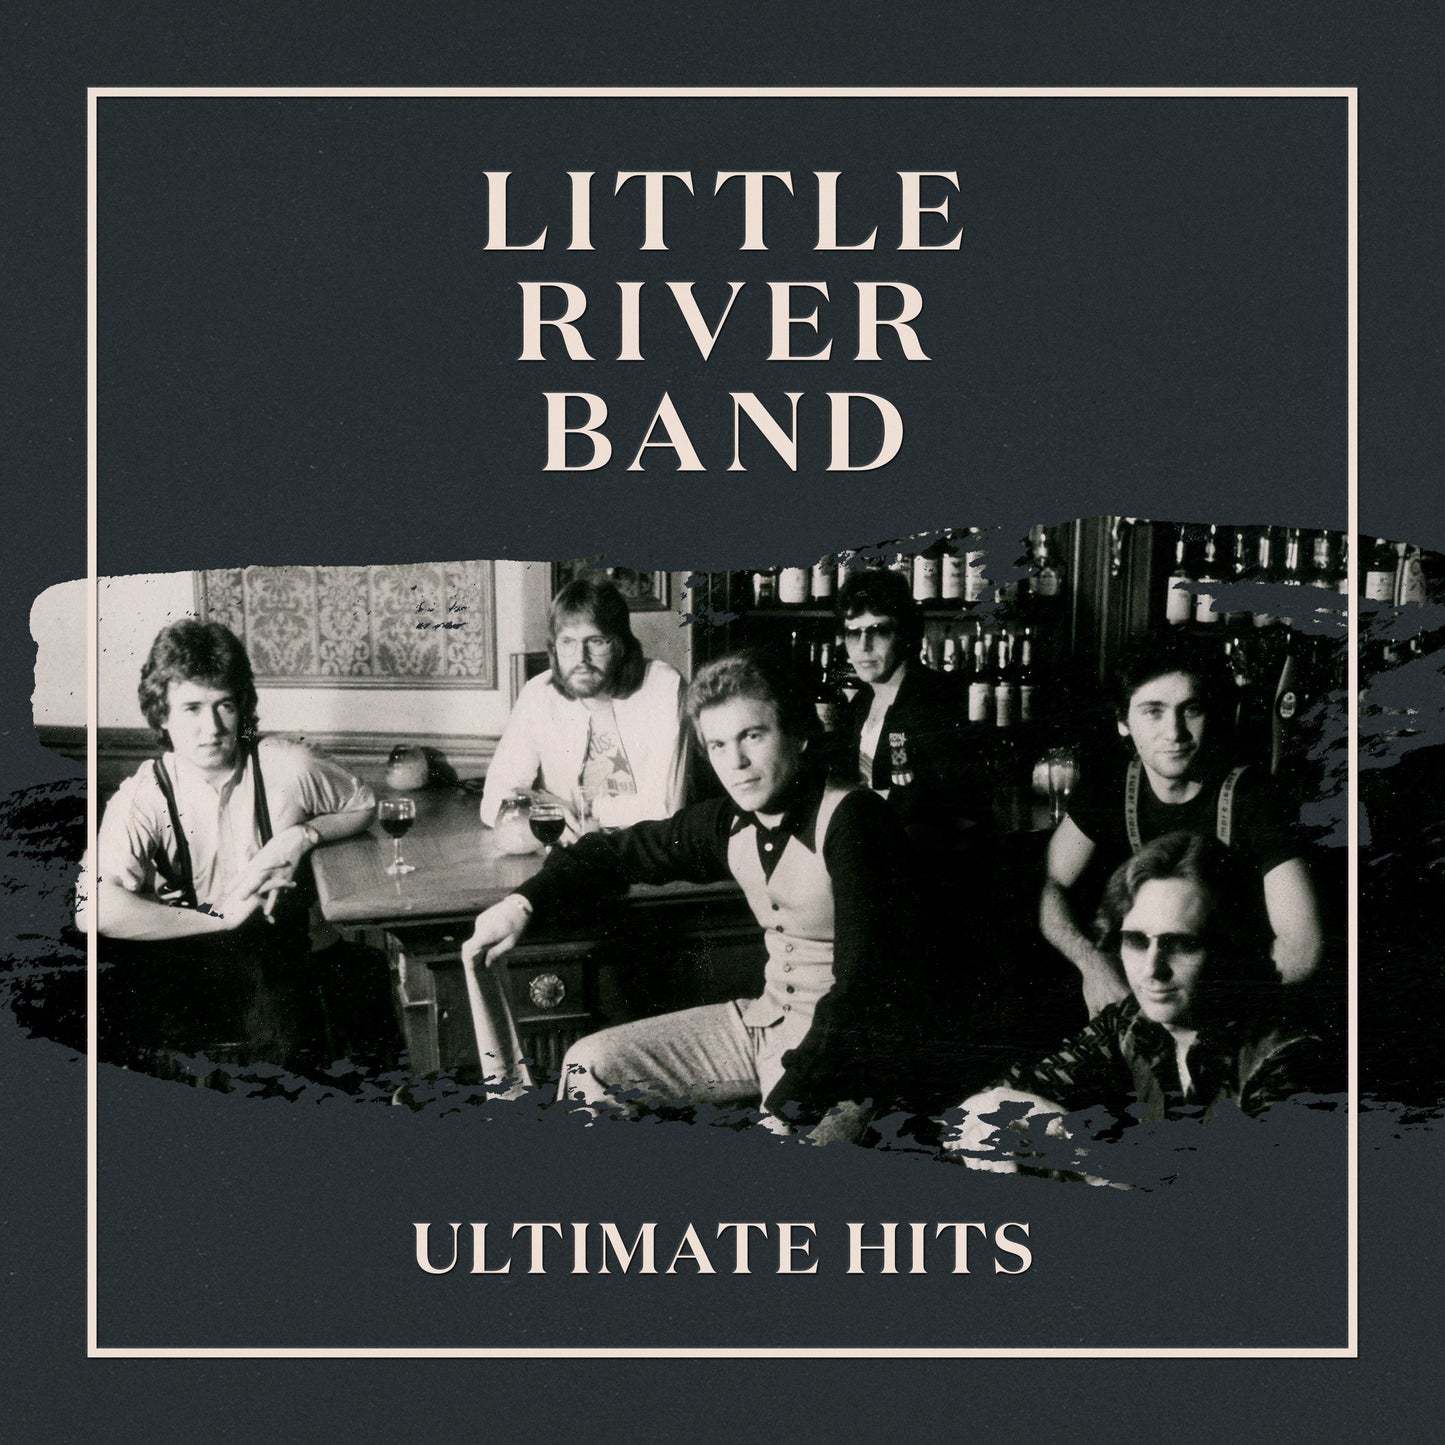 Little River Band - Ultimate Hits (2CD) - CD Album UM-5396742